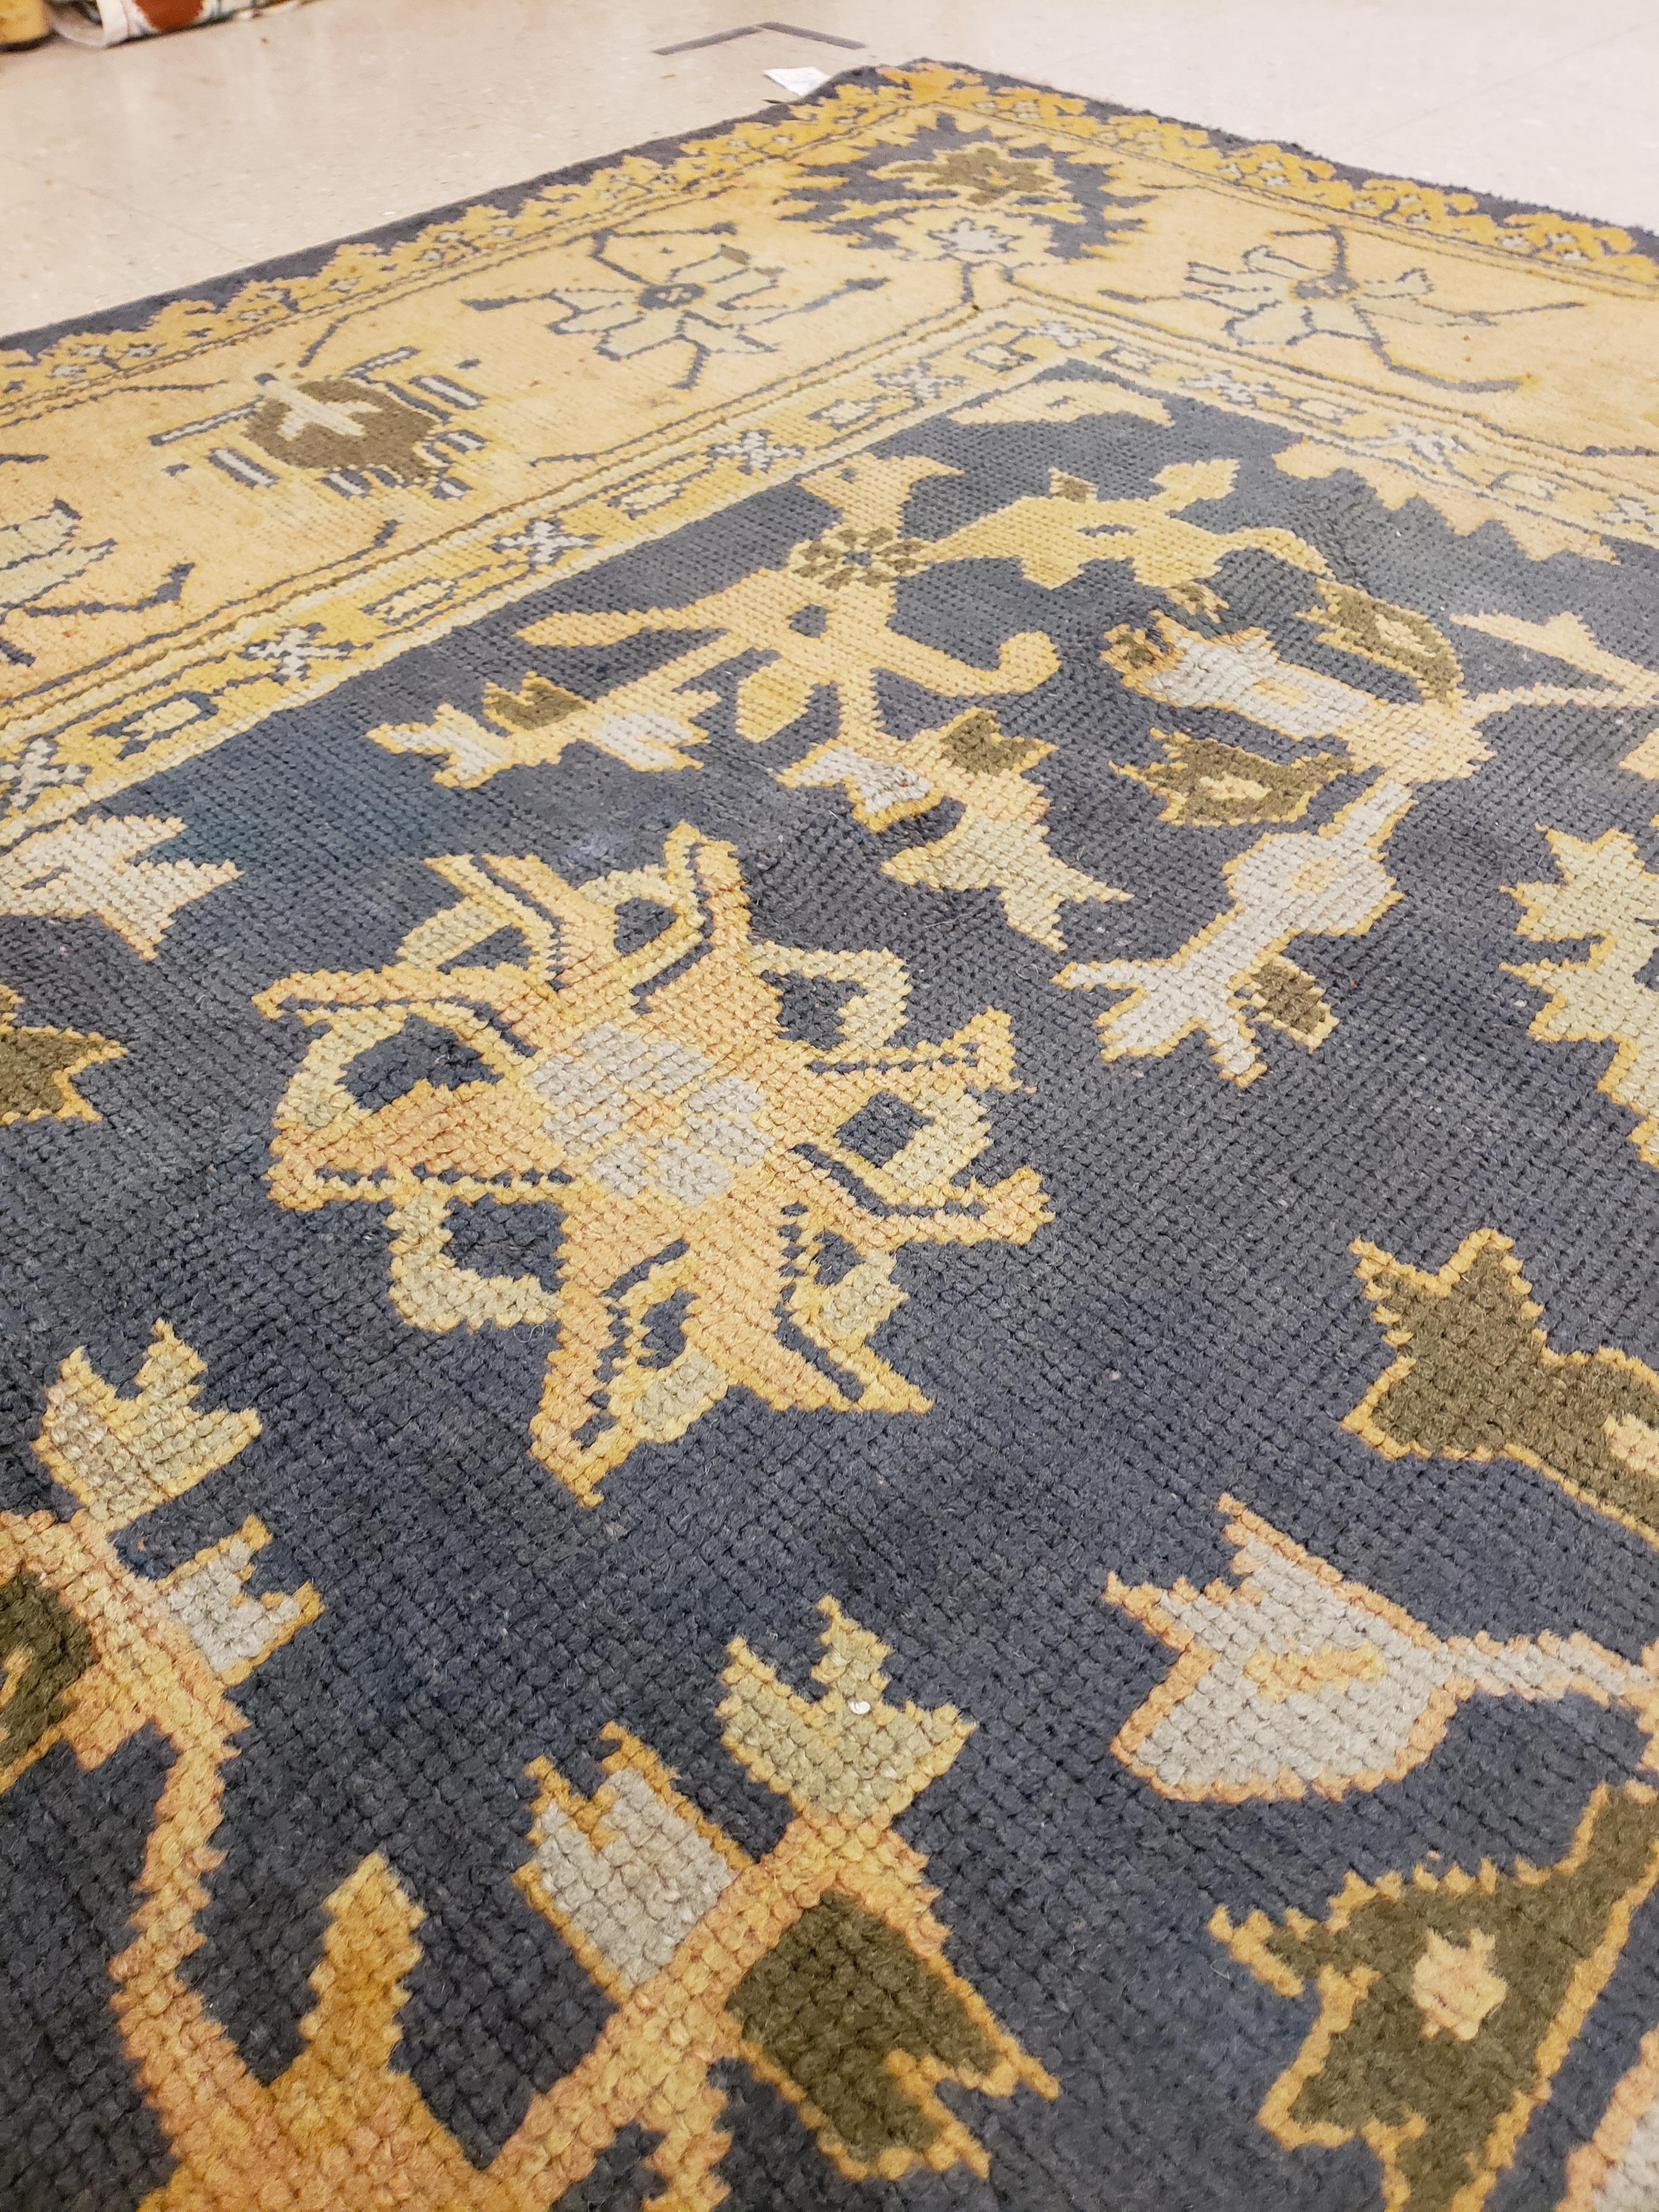 Wool Antique Oushak Carpet, Handmade Oriental Rug Made in Turkey, Peach, Blue, Ivory For Sale